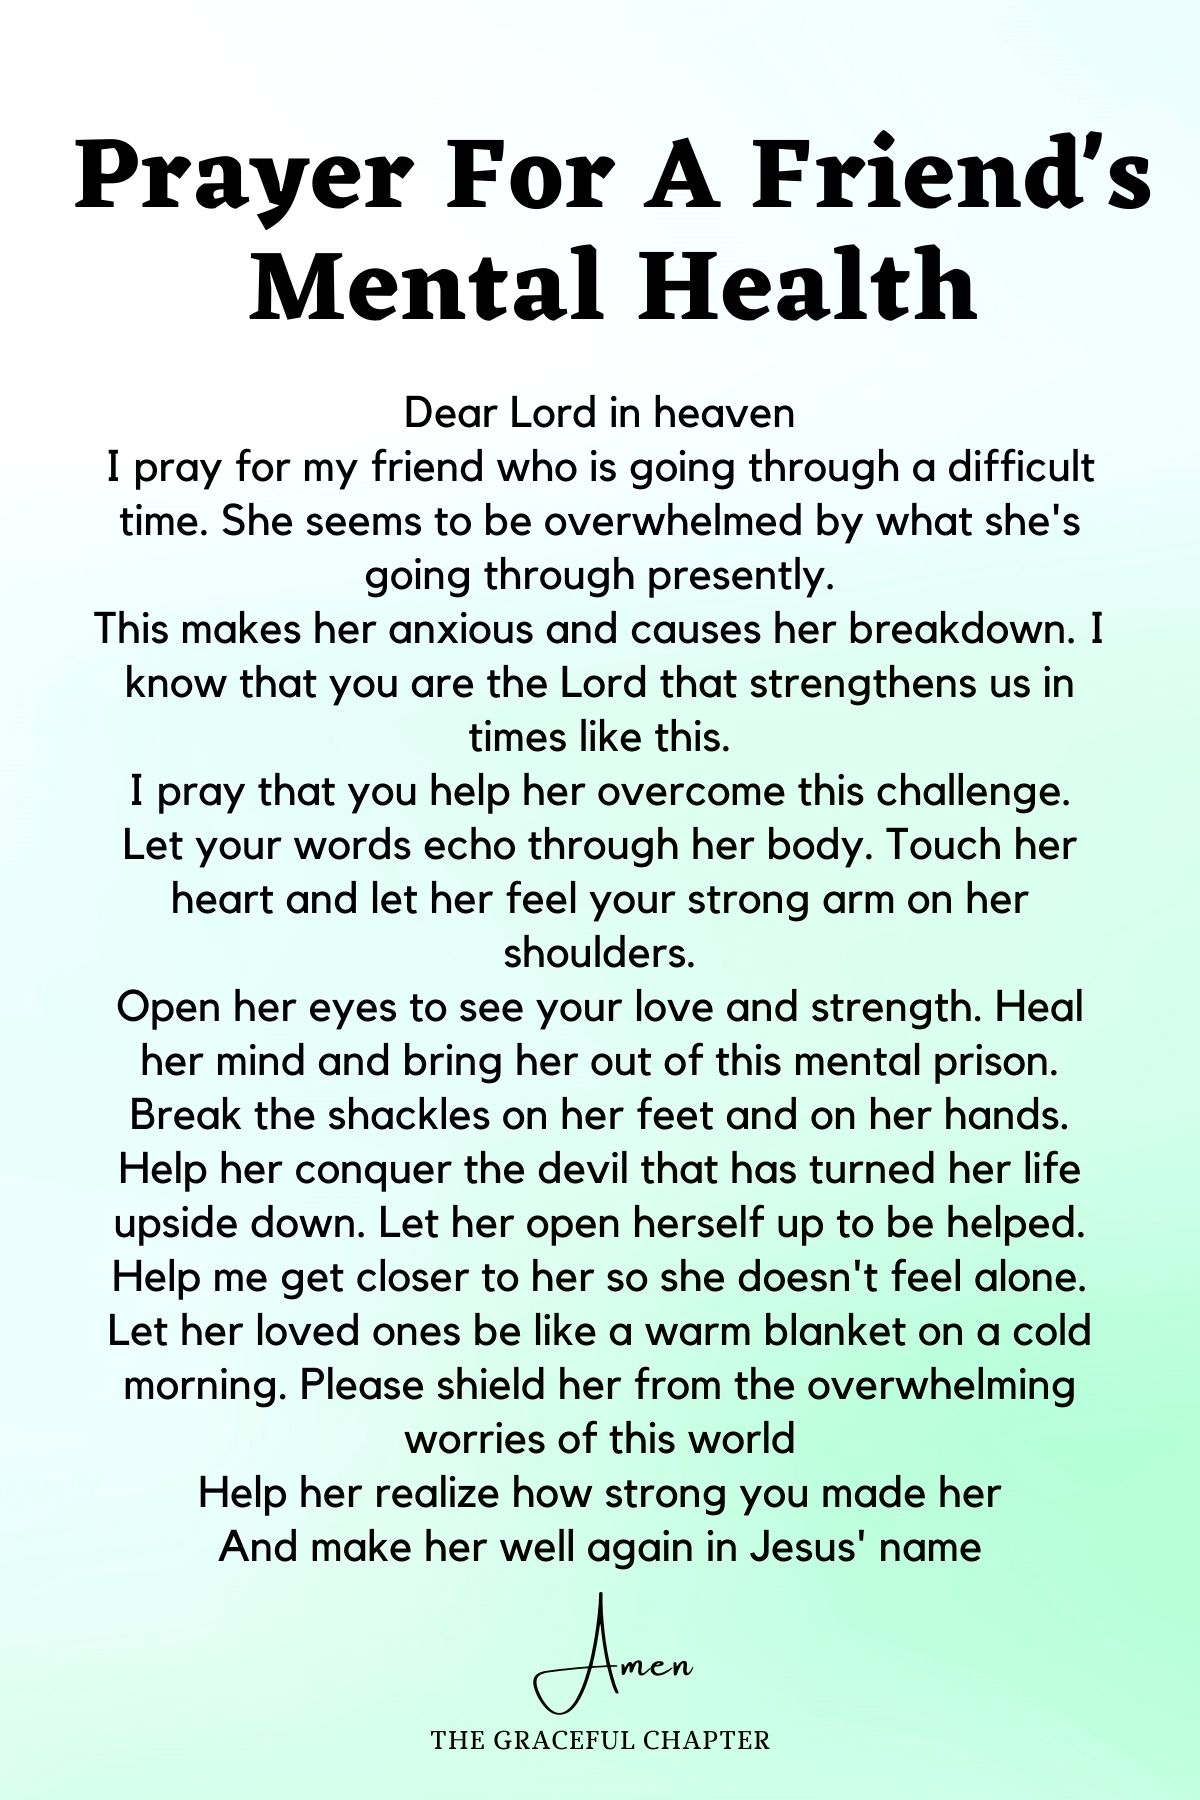 Prayer for a friend's mental health